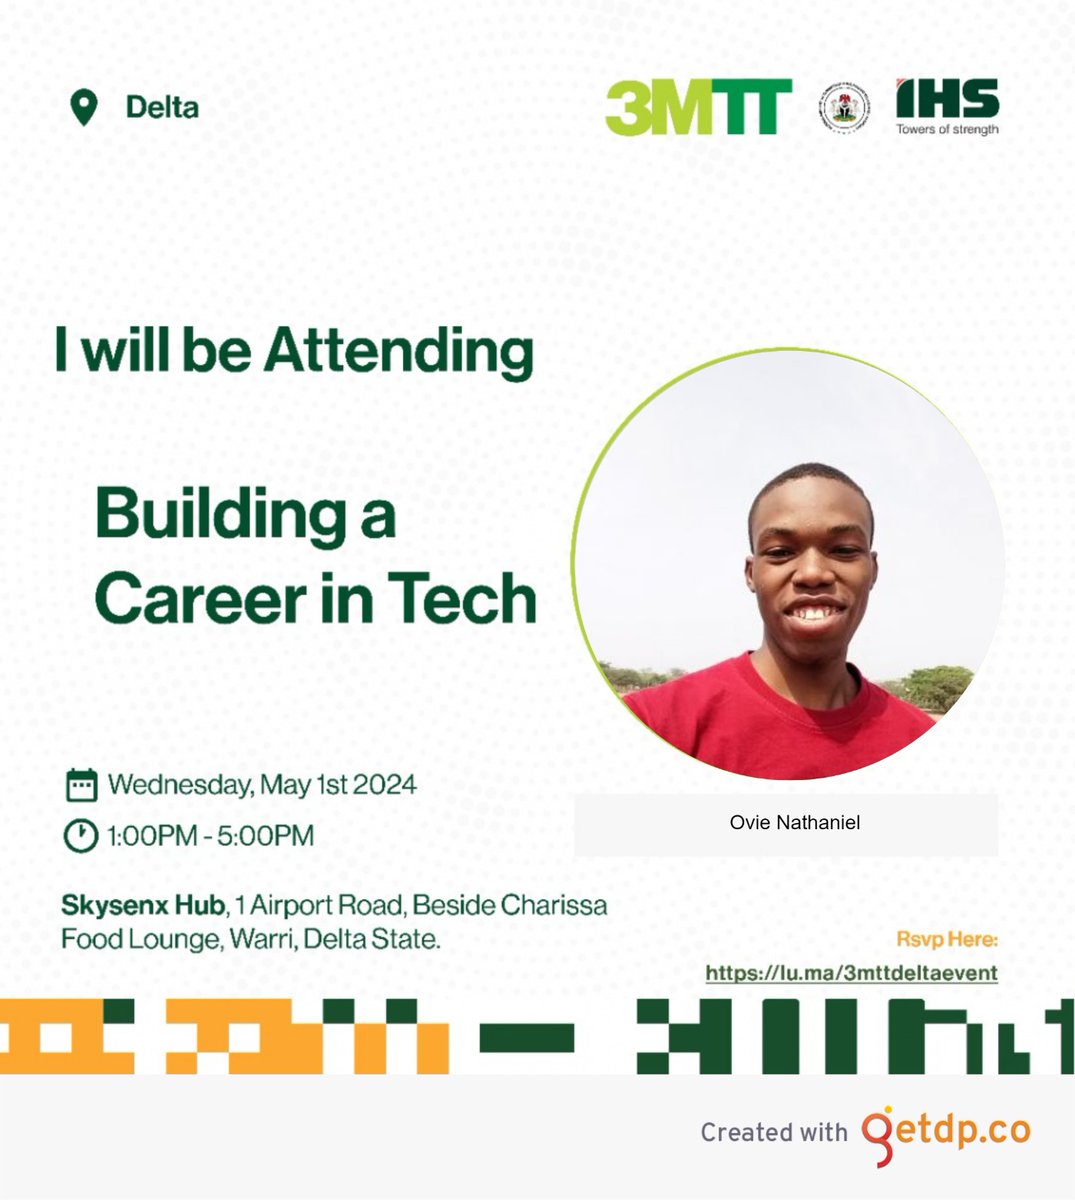 Can't wait to attend this event #3MTTDelta thanks to @3MTTNigeria and @bosuntijani